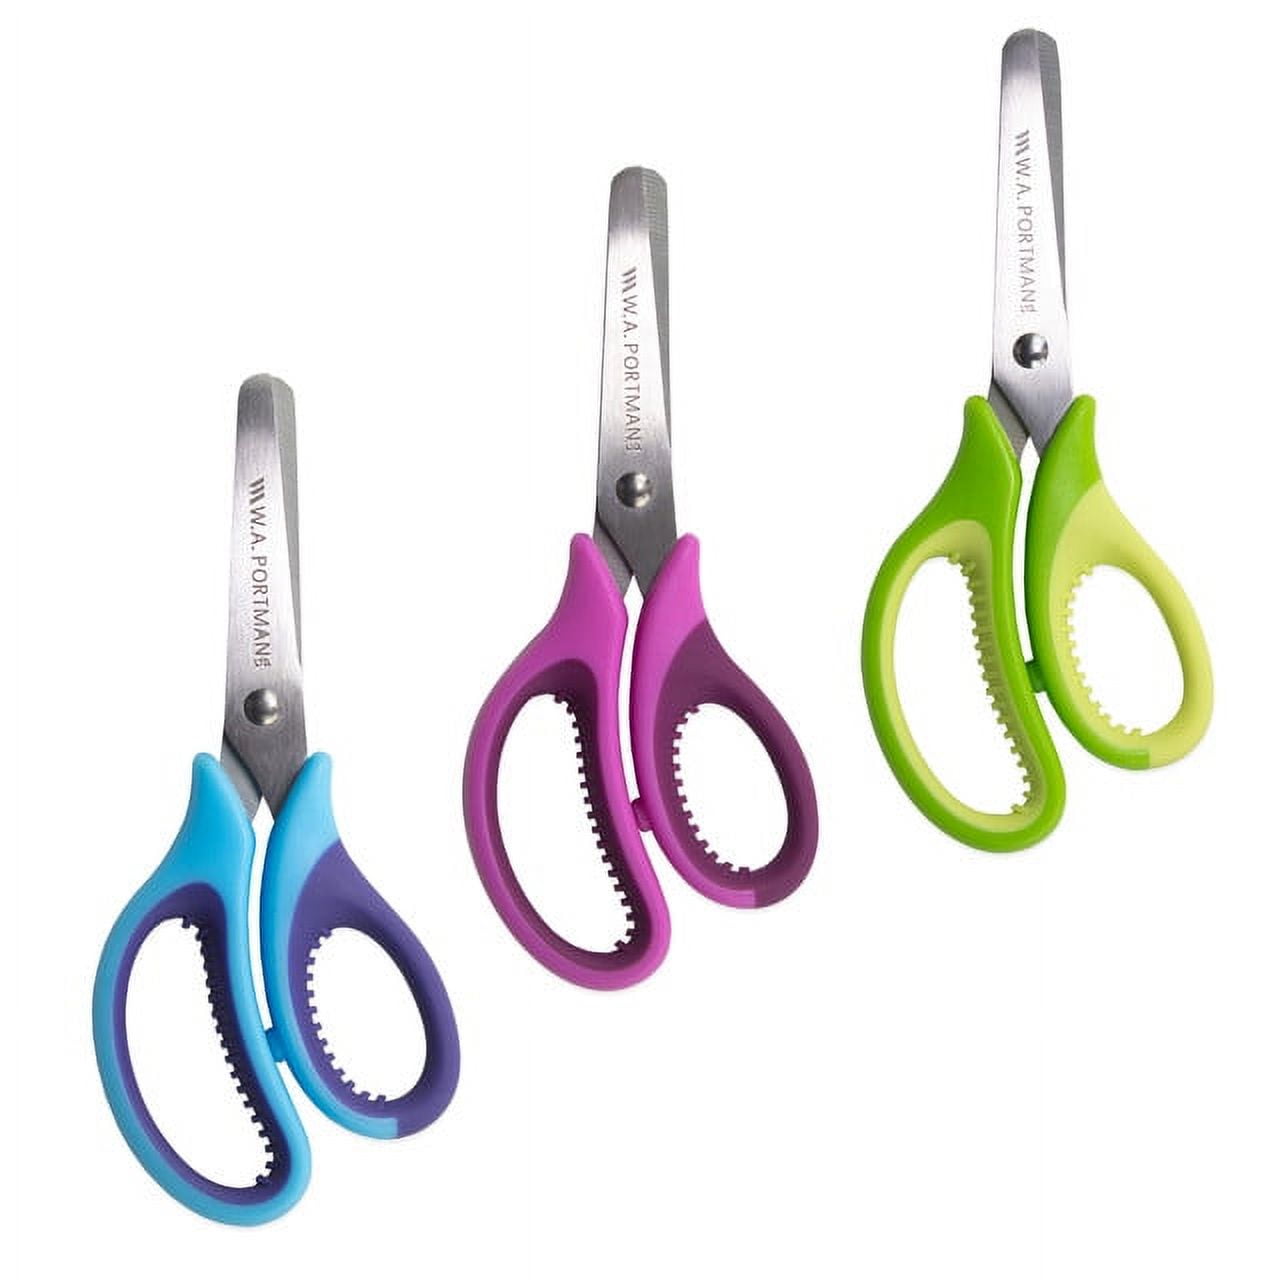 WA Portman Kids Scissors, Blunt Tip, 3 Pack of Scissors 